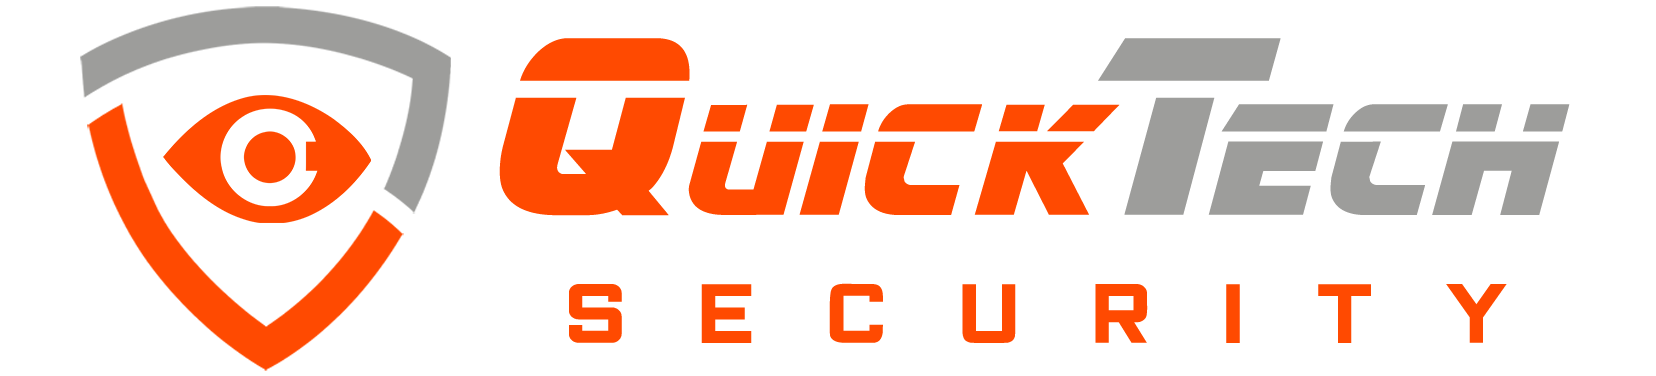 QuickTech Security